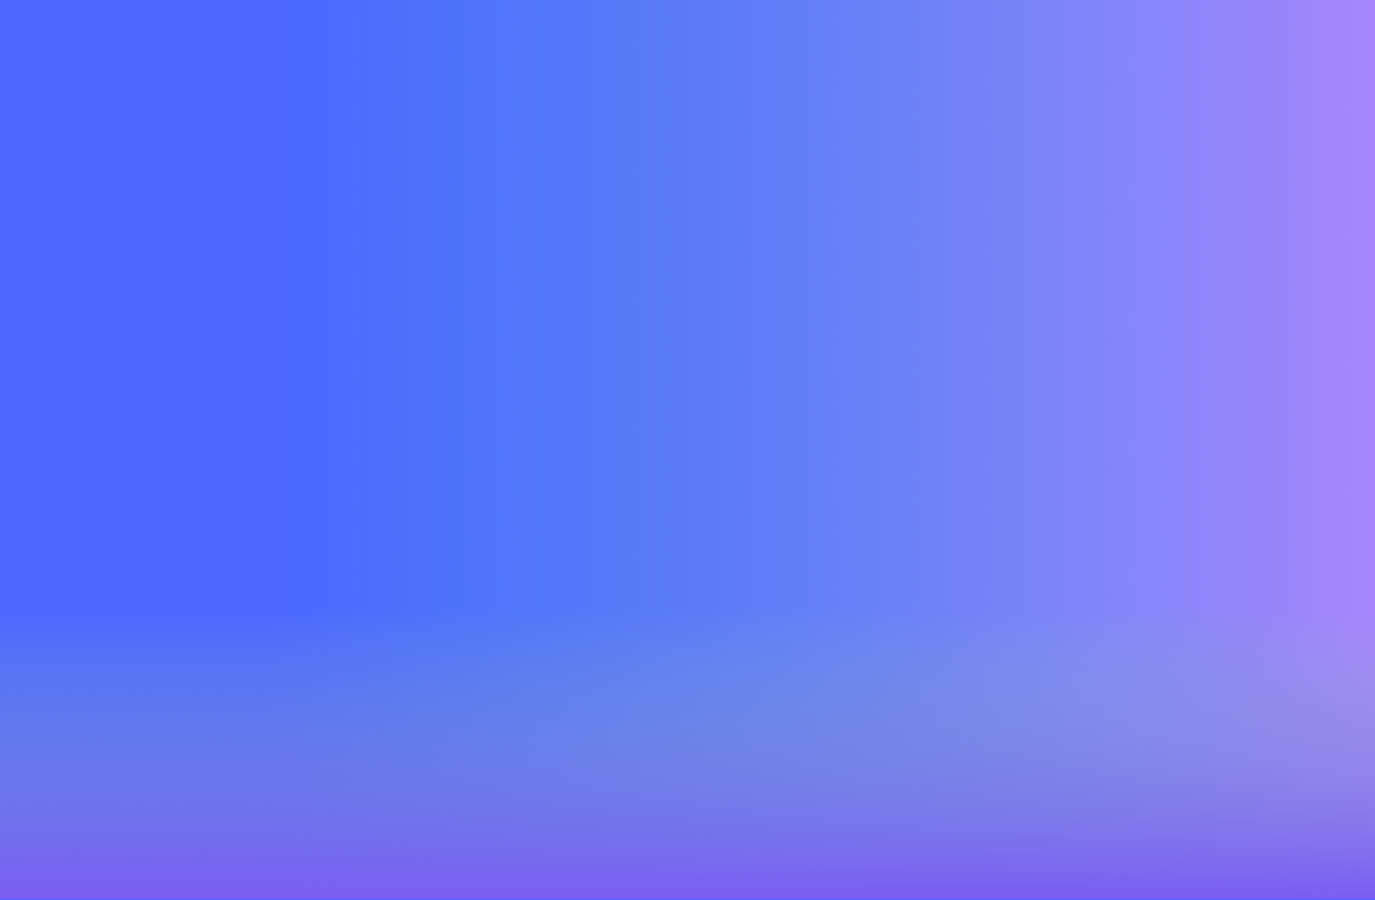 H6 background purple and fuchsia gradient